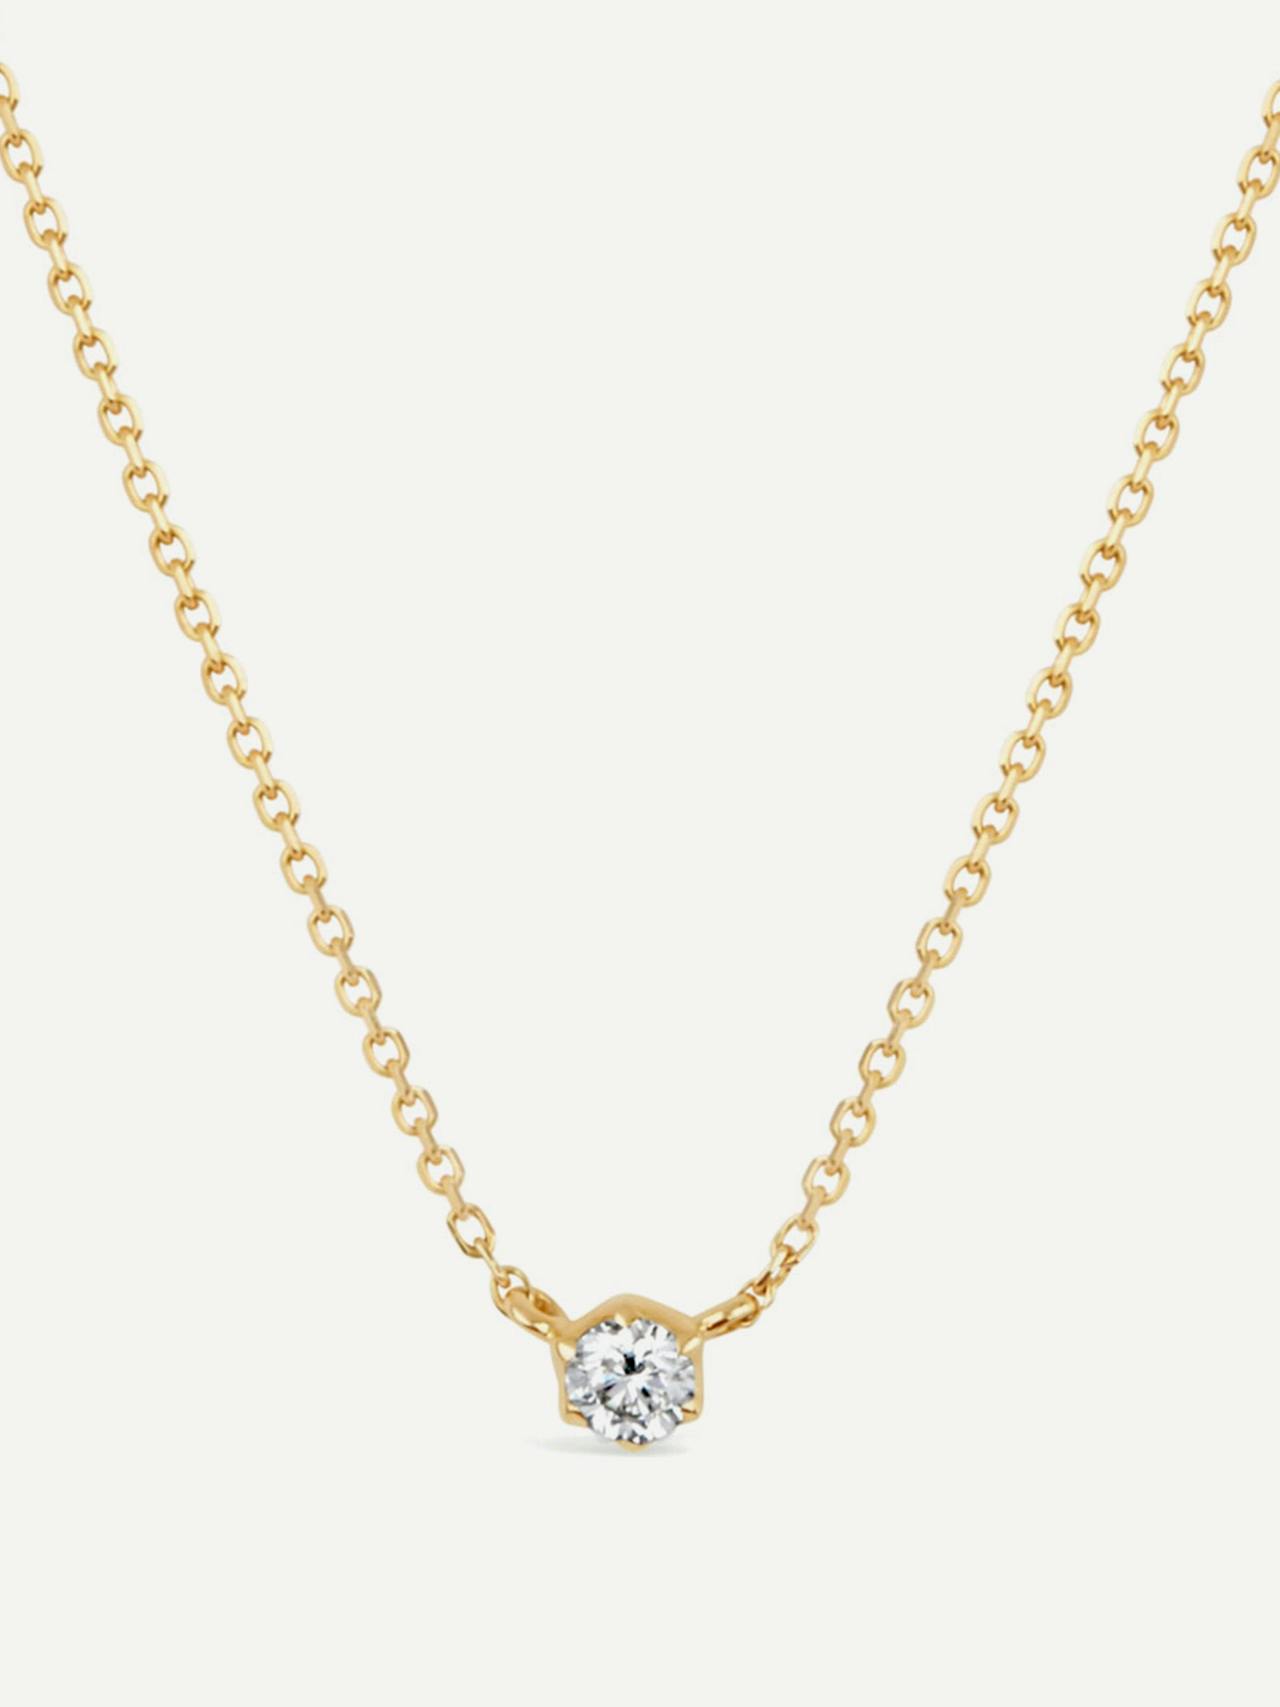 Elyhara small diamond pendant necklace